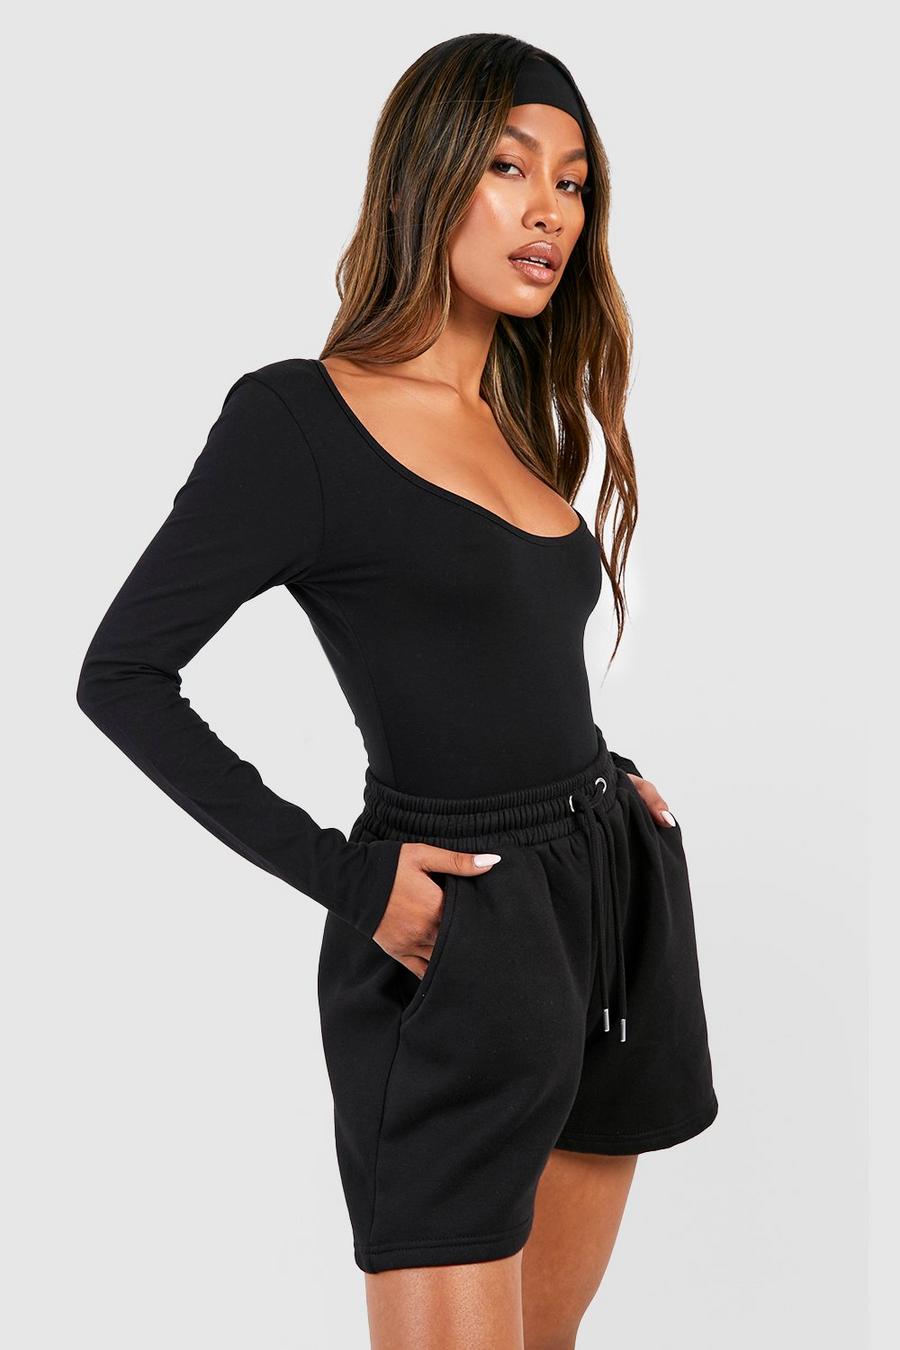 https://media.boohoo.com/i/boohoo/fzz33944_black_xl/female-black-basic-long-sleeve-scoop-neck-bodysuit/?w=900&qlt=default&fmt.jp2.qlt=70&fmt=auto&sm=fit